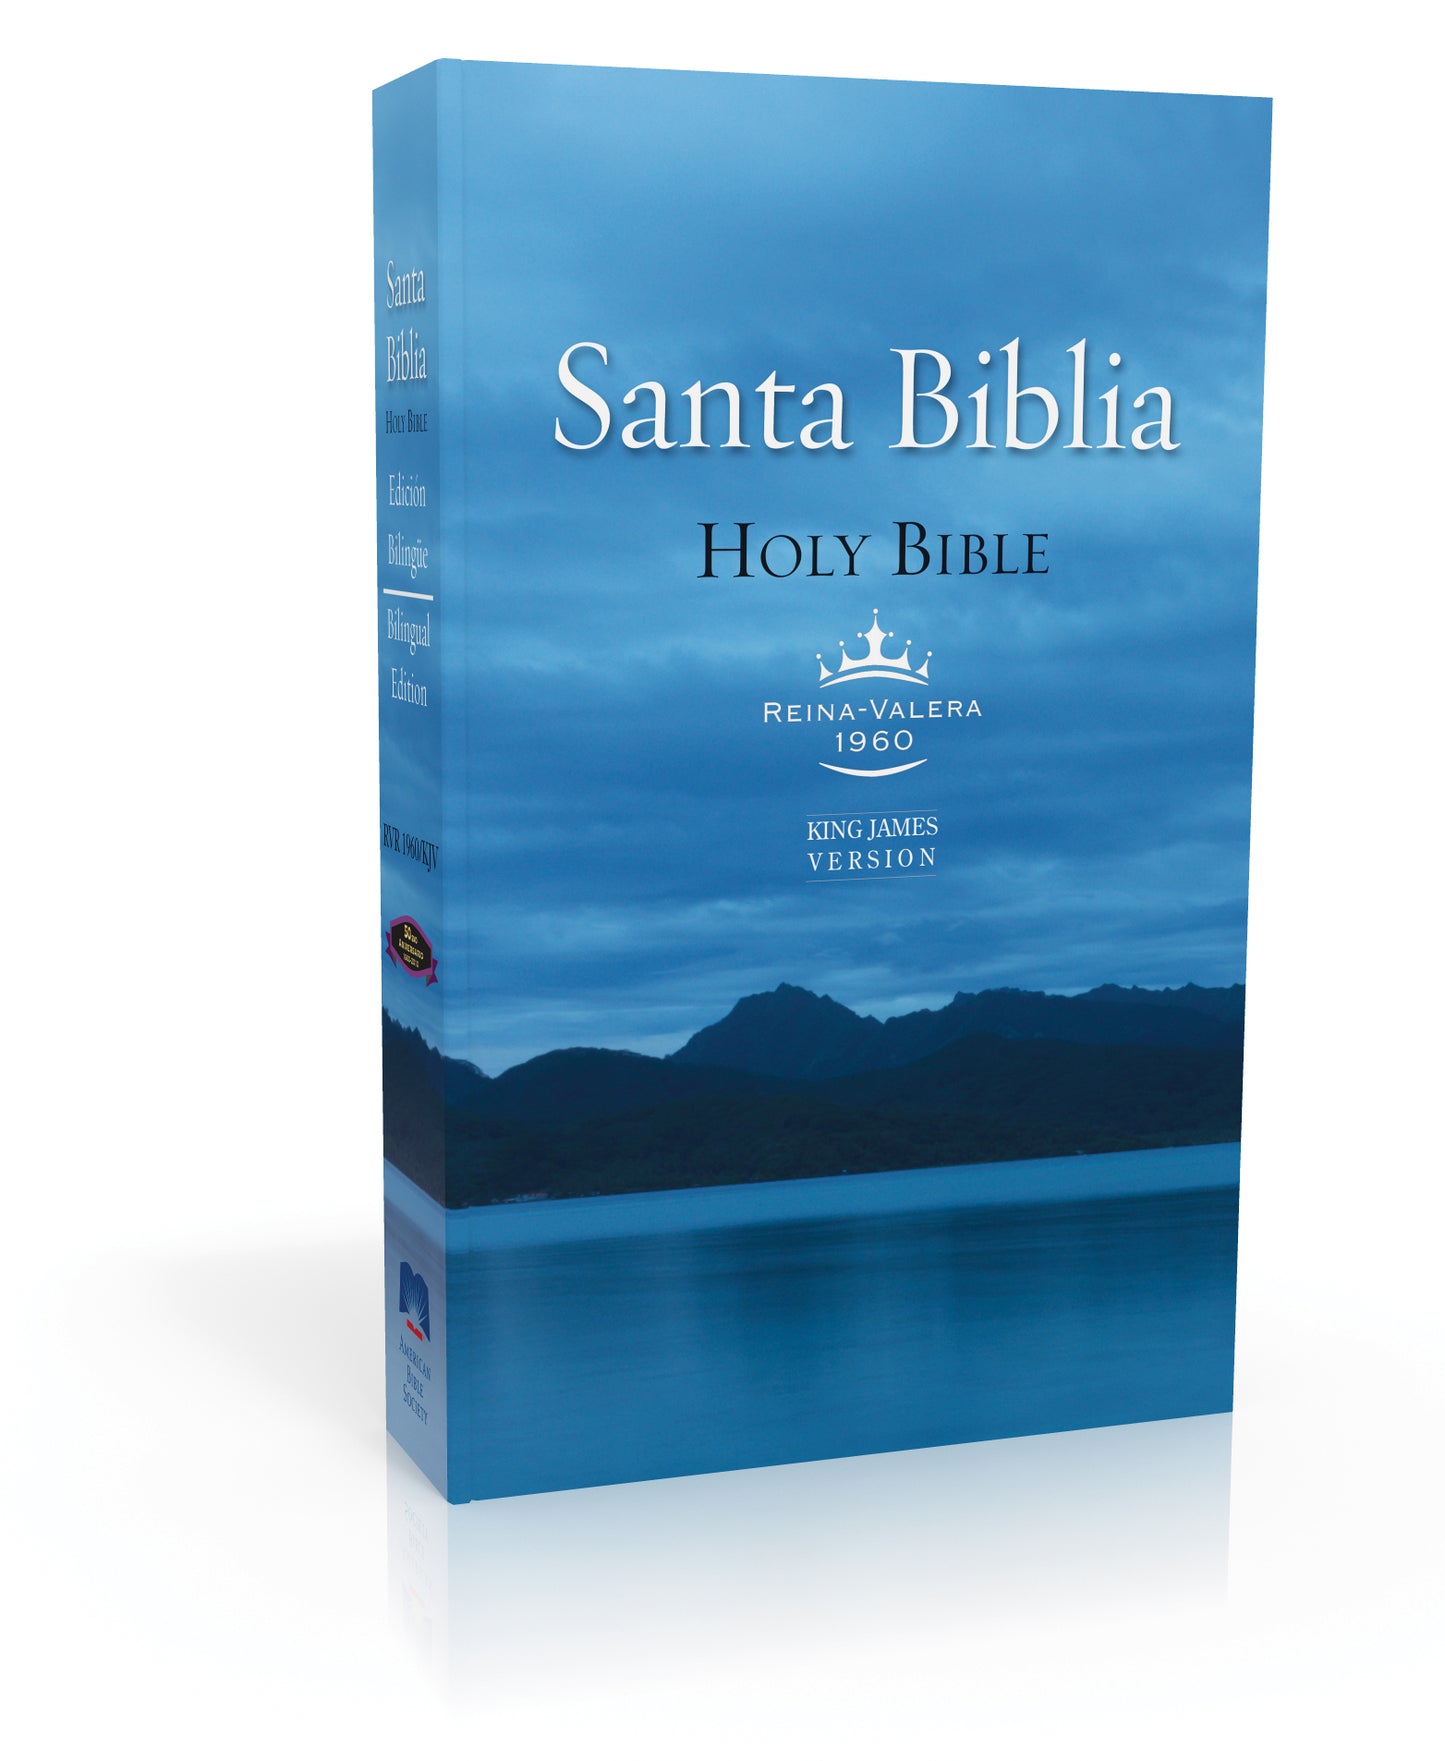 RVR60/KJV Spanish Bilingual Bible